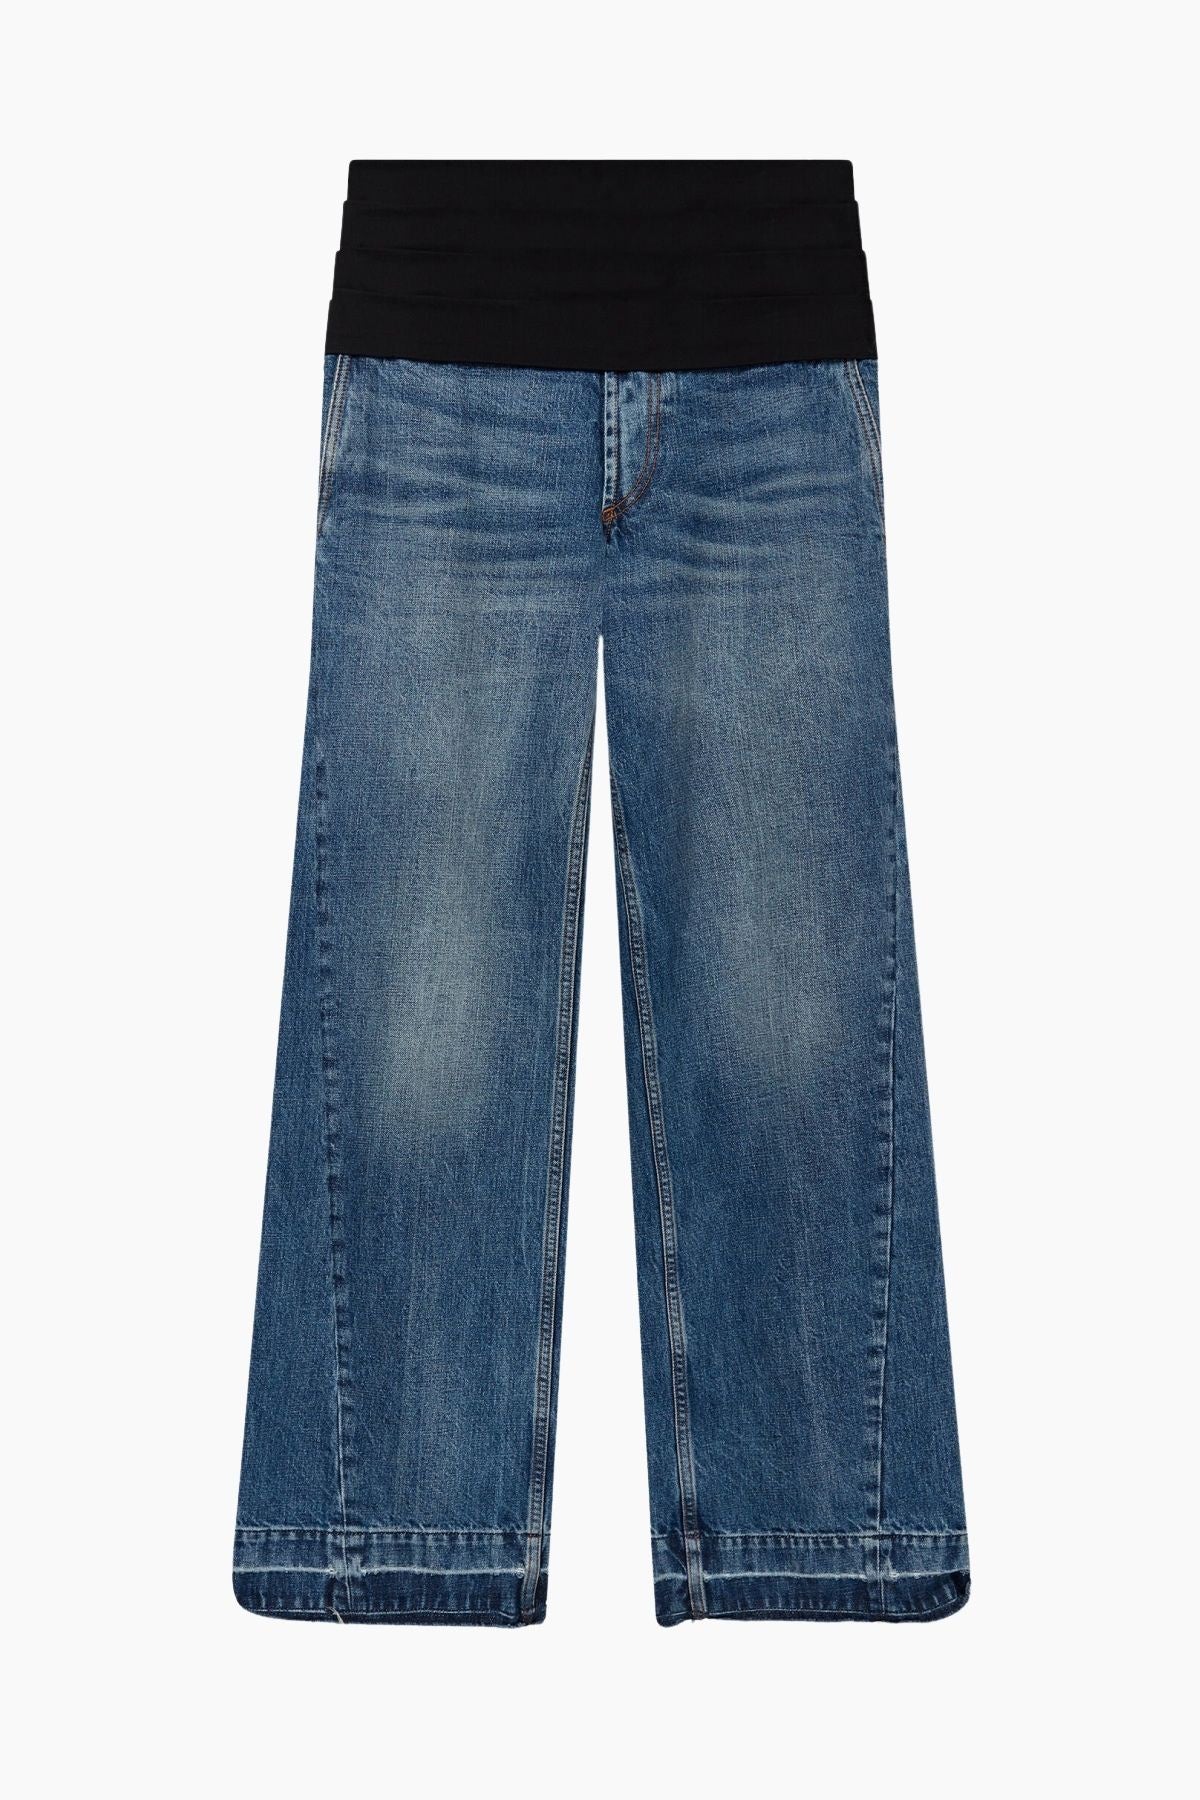 Stella McCartney Tuxedo Jeans- Mid Vintage Blue